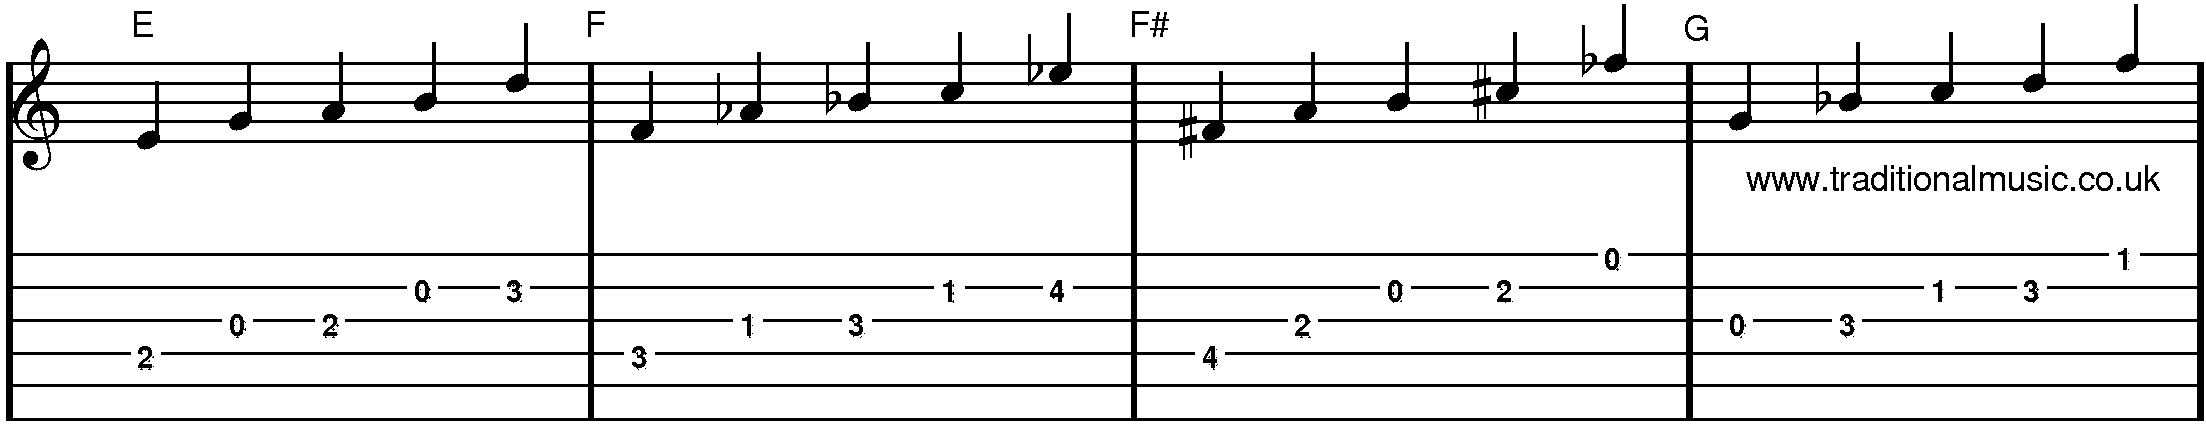 Minor Pentatonic Scales Guitar in standard tuning E-G